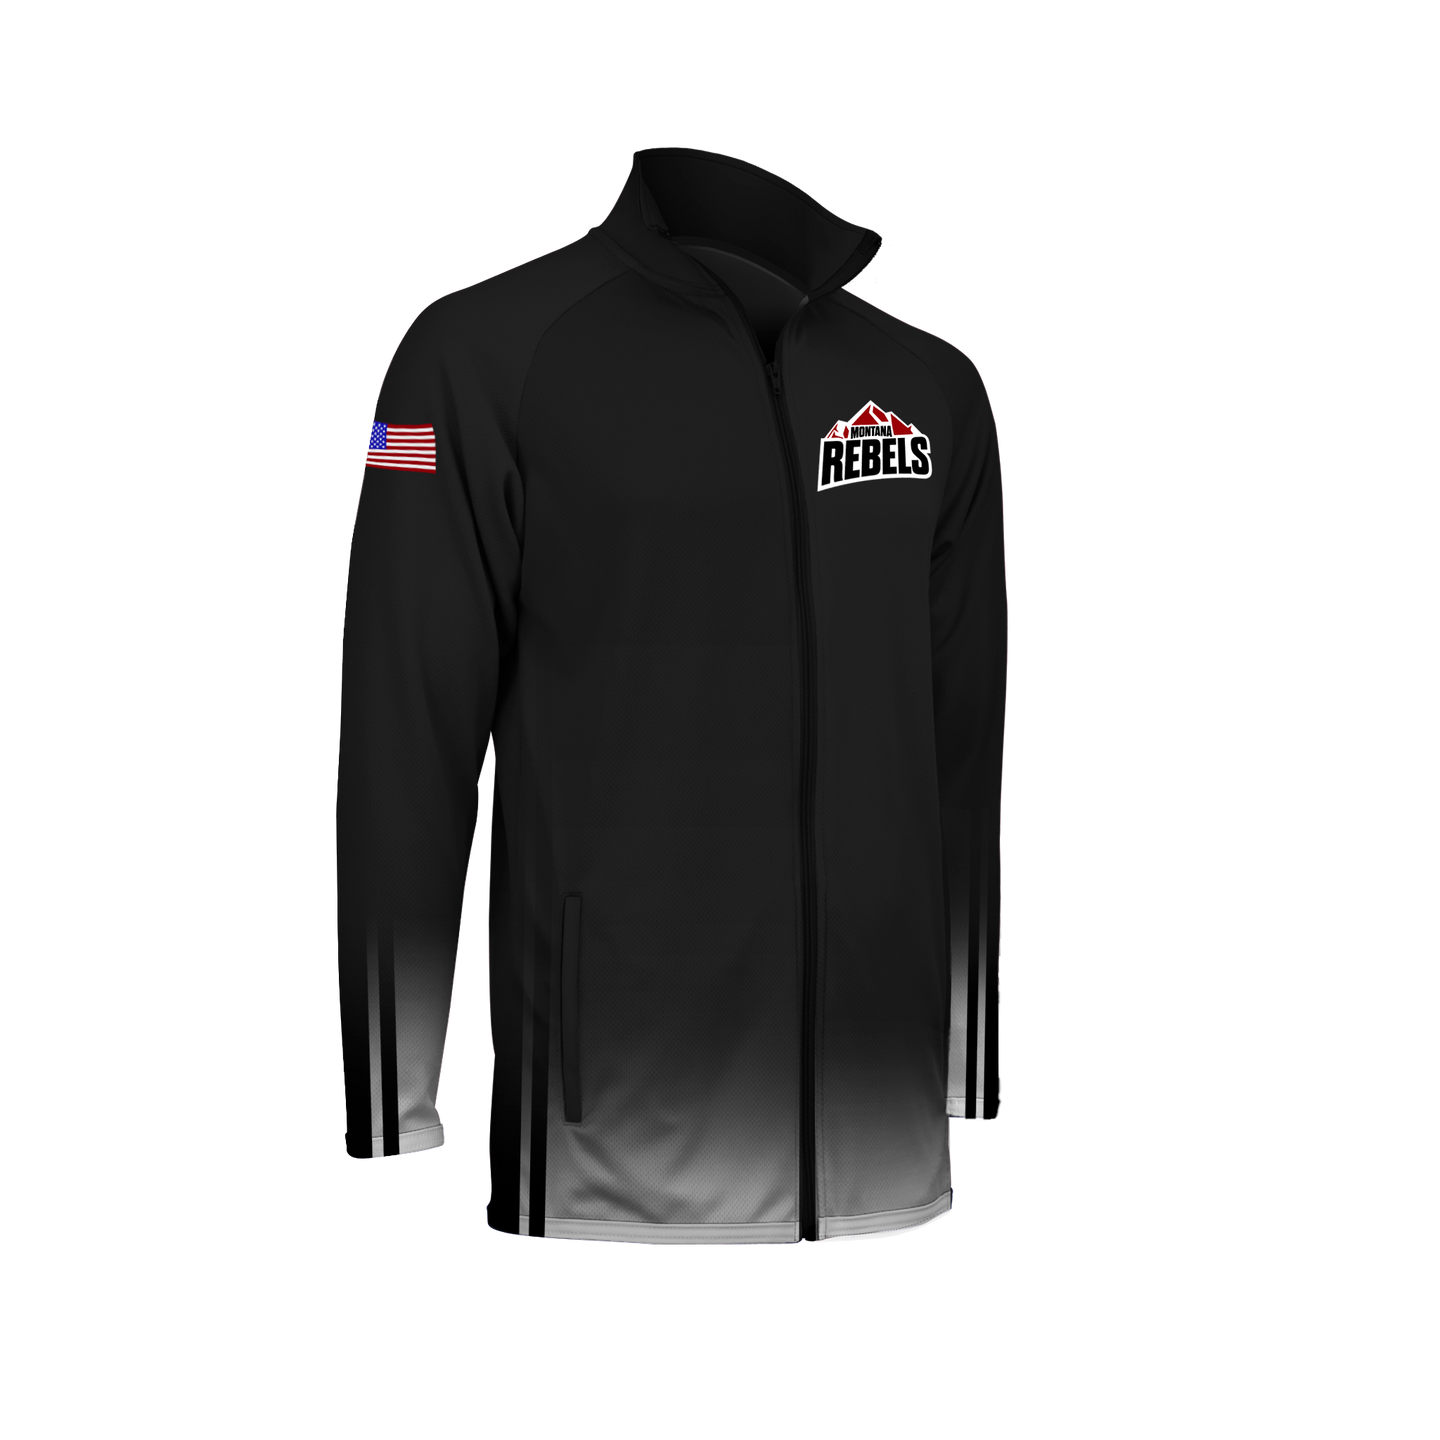 Men's Montana Rebels Full Zip Warm-Up Jacket with Personalization